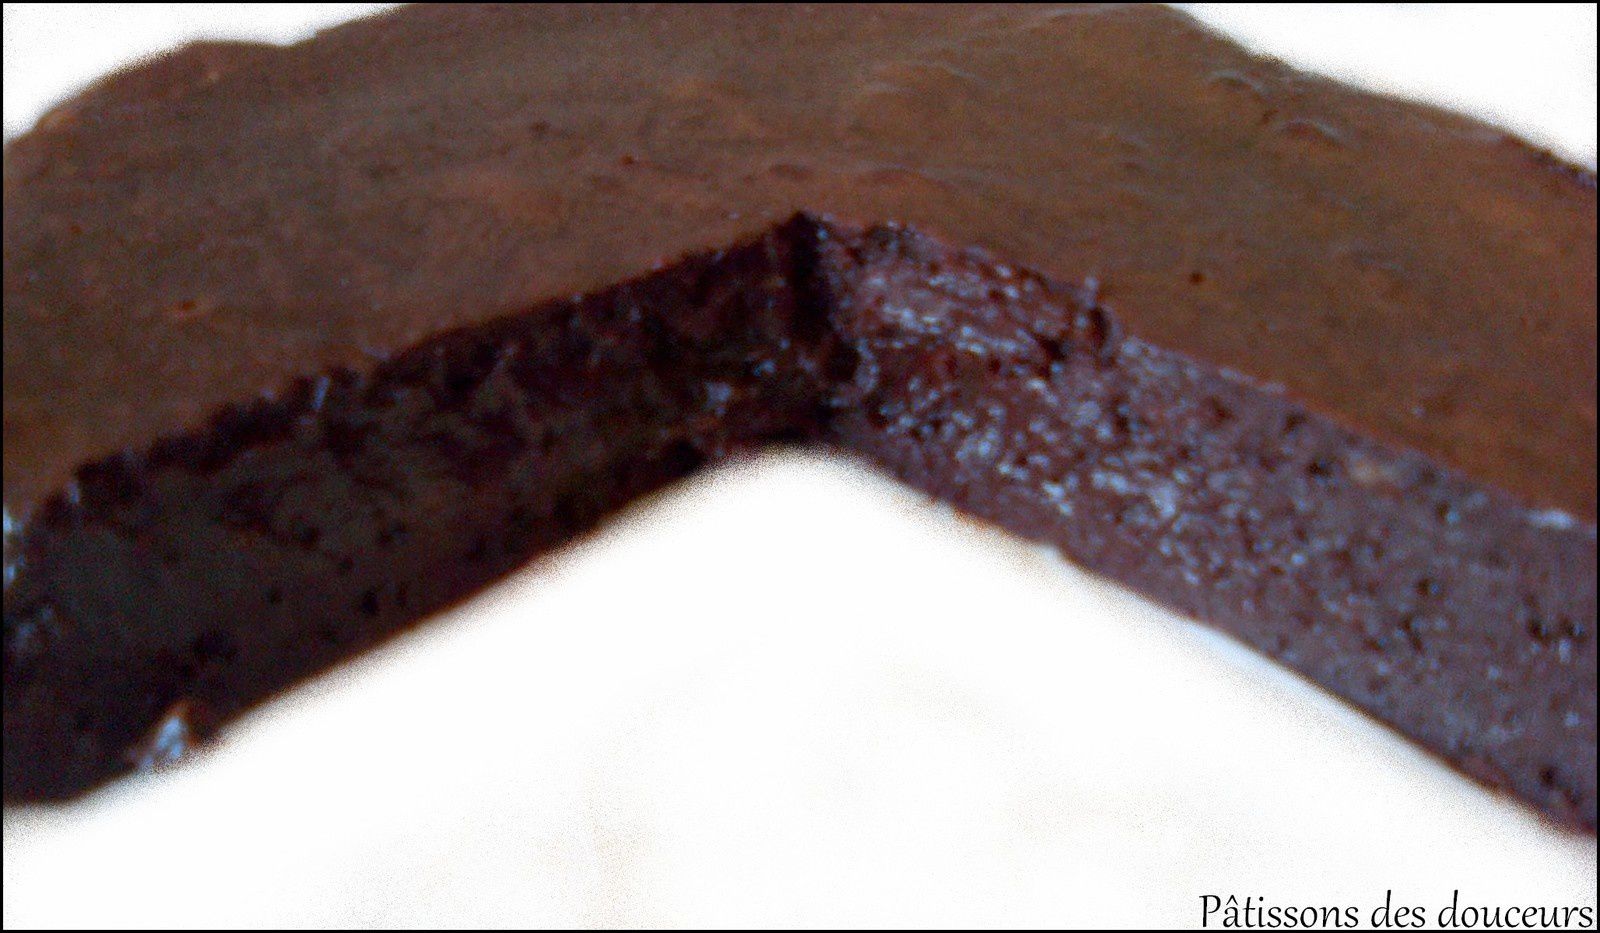 Un gâteau au chocolat ultra fondant et extrêmement chocolaté !